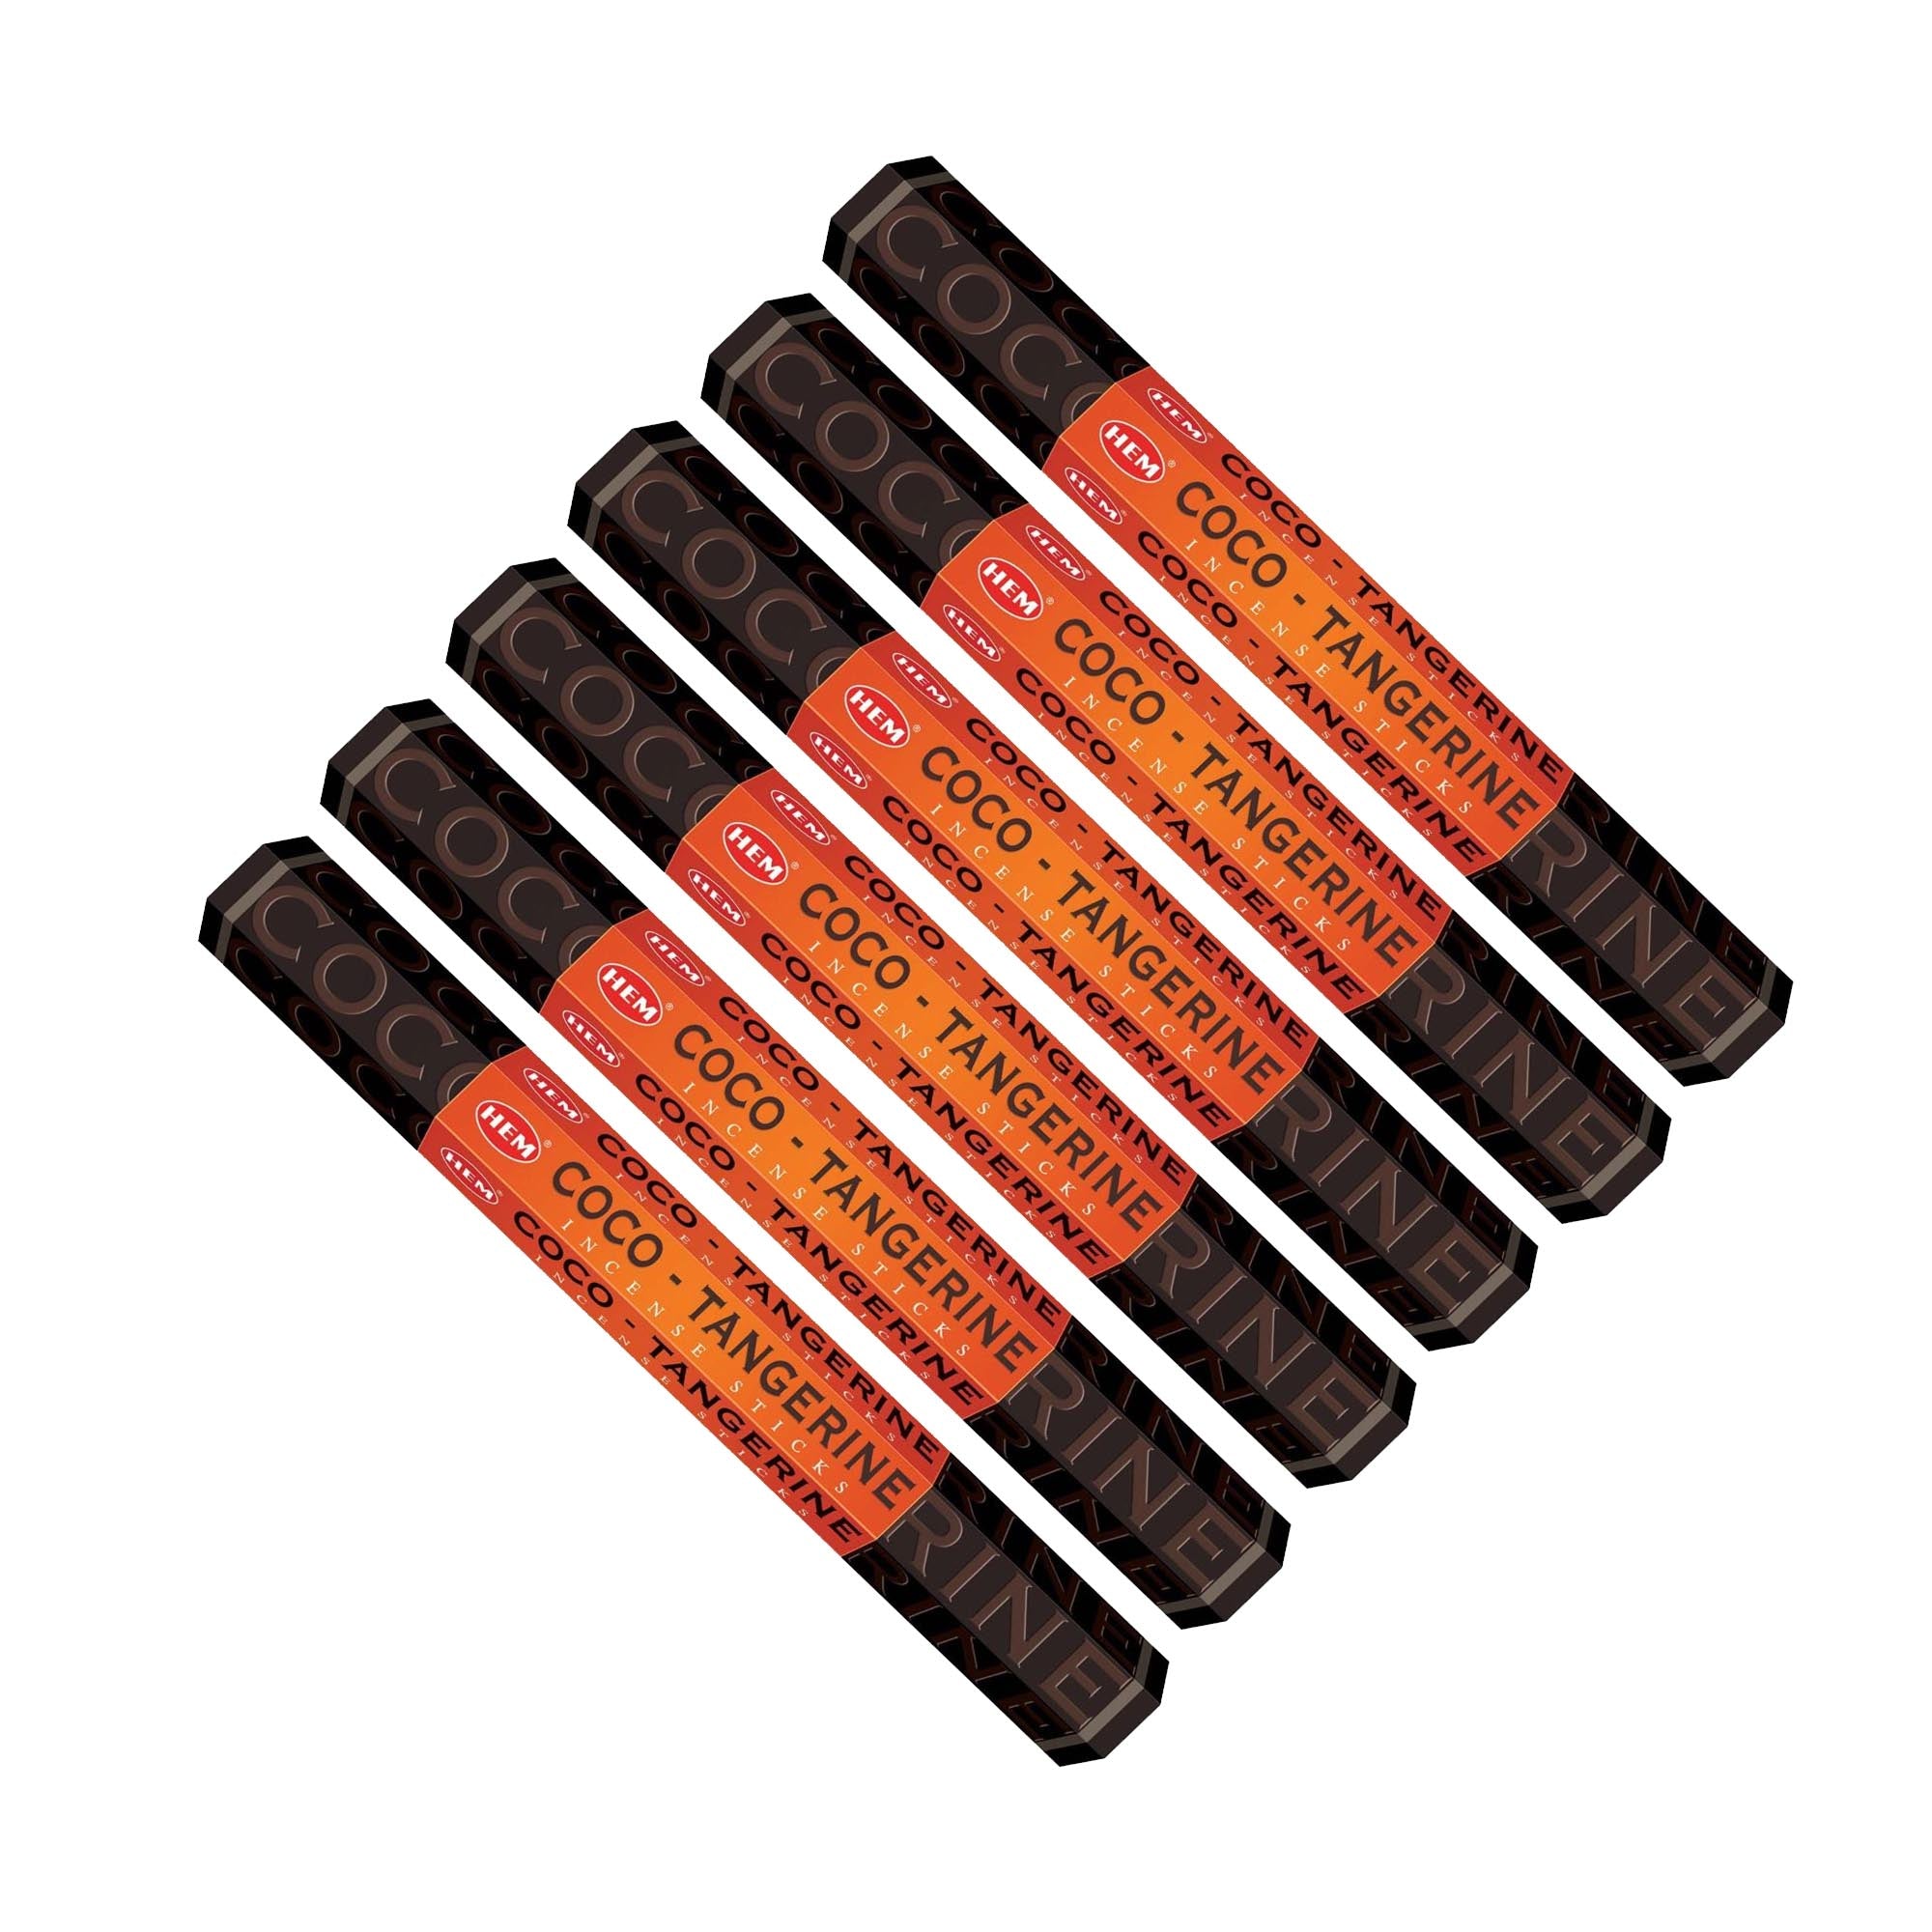 HEM - Hexagon - Coco Tangerine Incense Sticks